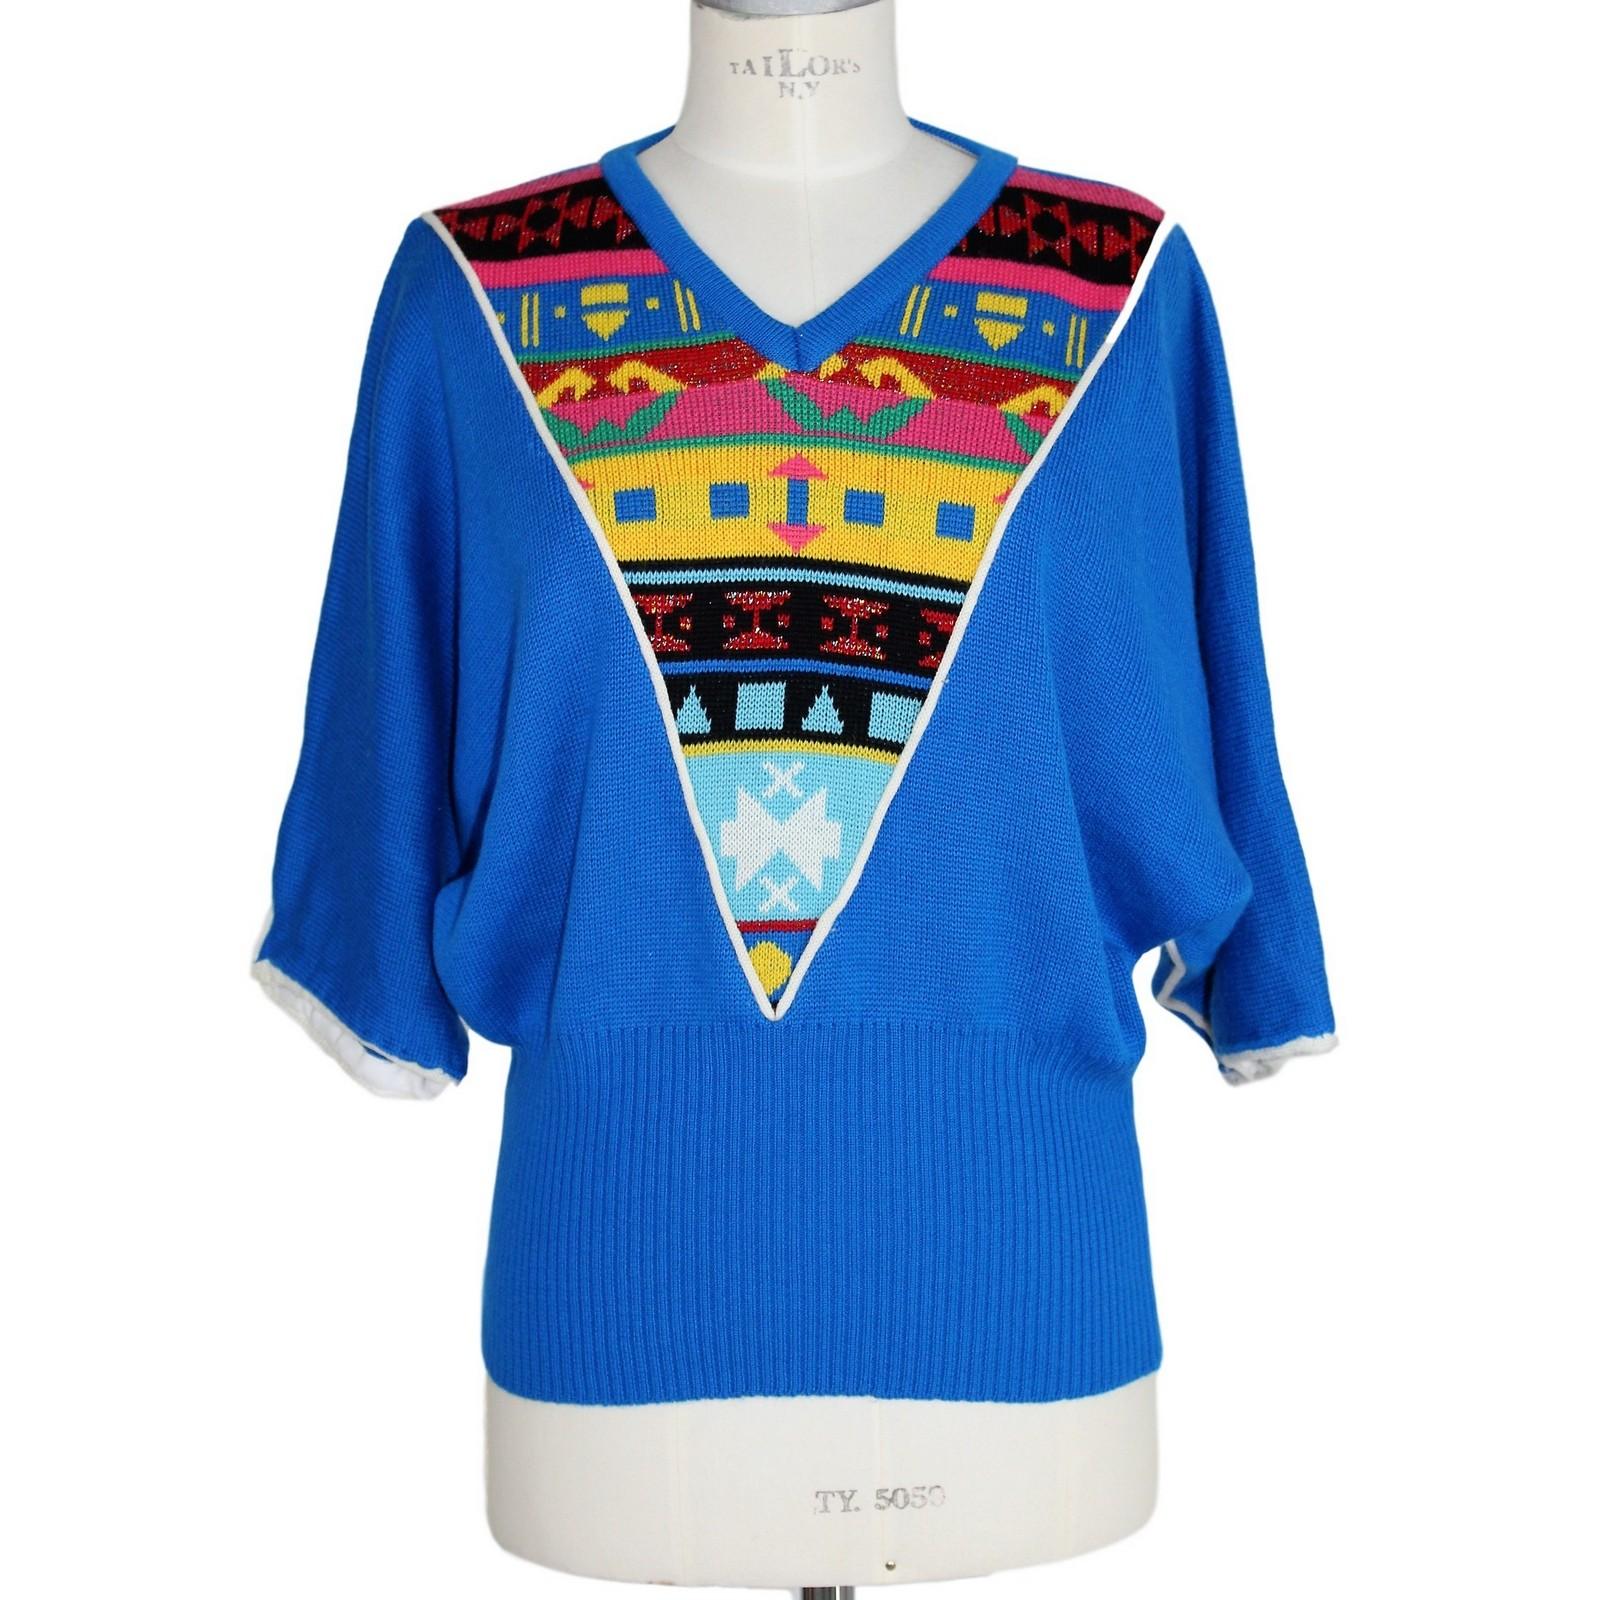 Pierre Cardin sweater vintage blue. Batwing sleeves V neckline, front abstract design. Elastic waist. 100% pure new wool. Excellent vintage conditions

Size 44 IT 10 US 12 UK

Shoulder: 44 cm
Bust/Chest: 69 cm
Sleeve: 50 cm
Length: 60 cm